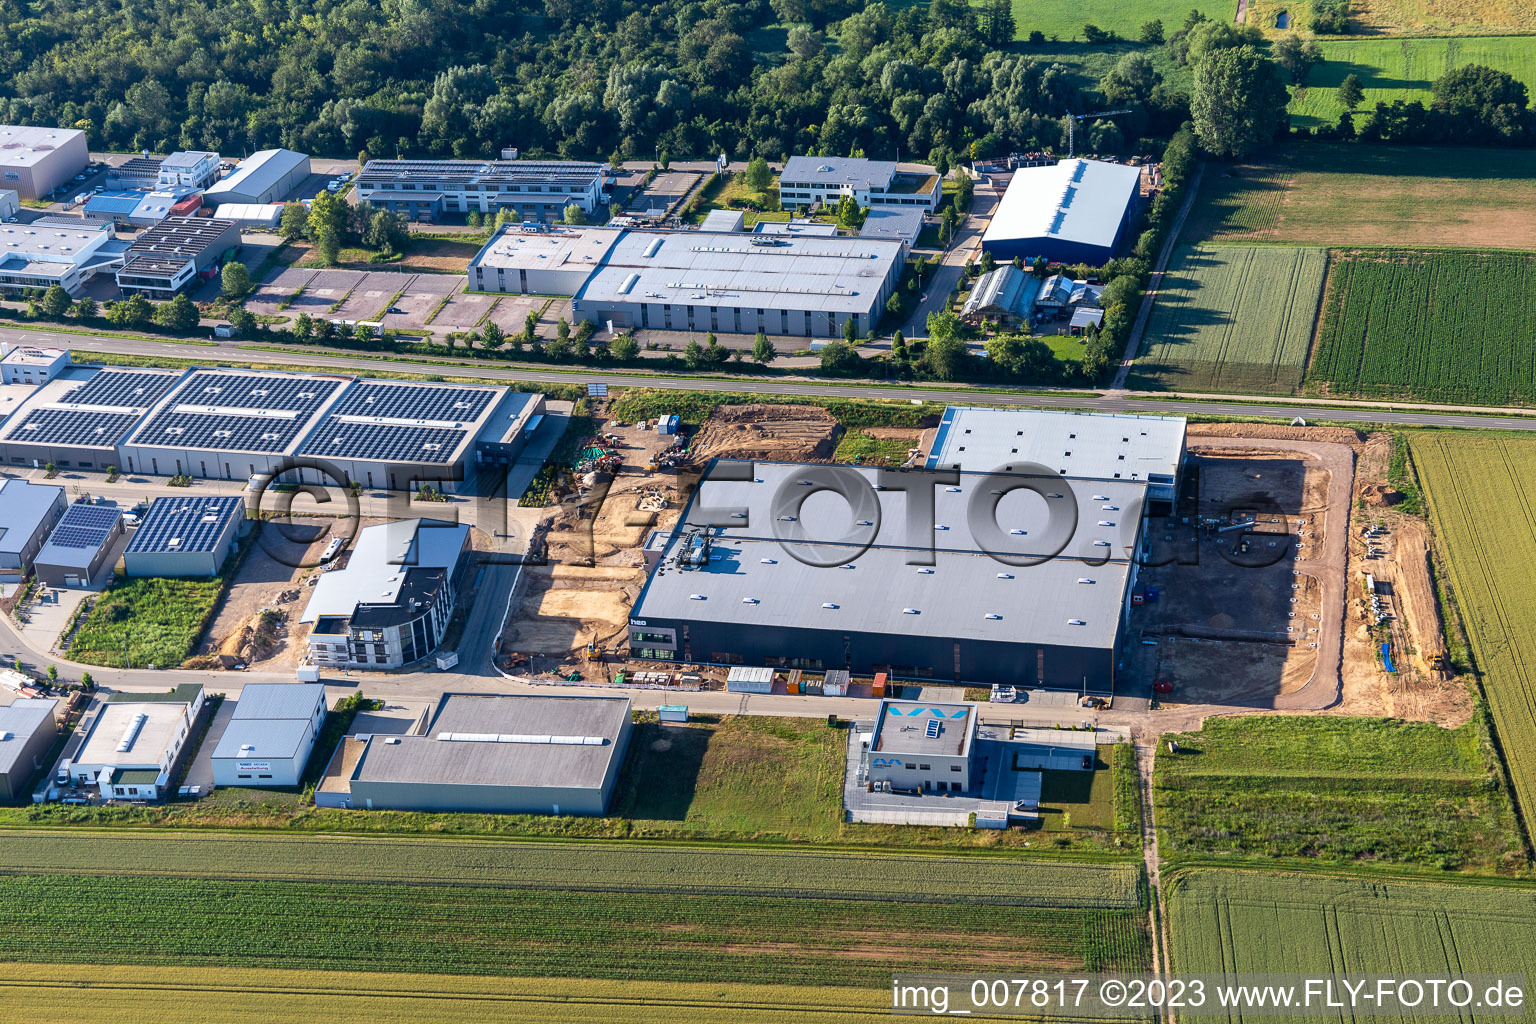 Aerial view of West Industrial Park in the district Herxheim in Herxheim bei Landau/Pfalz in the state Rhineland-Palatinate, Germany